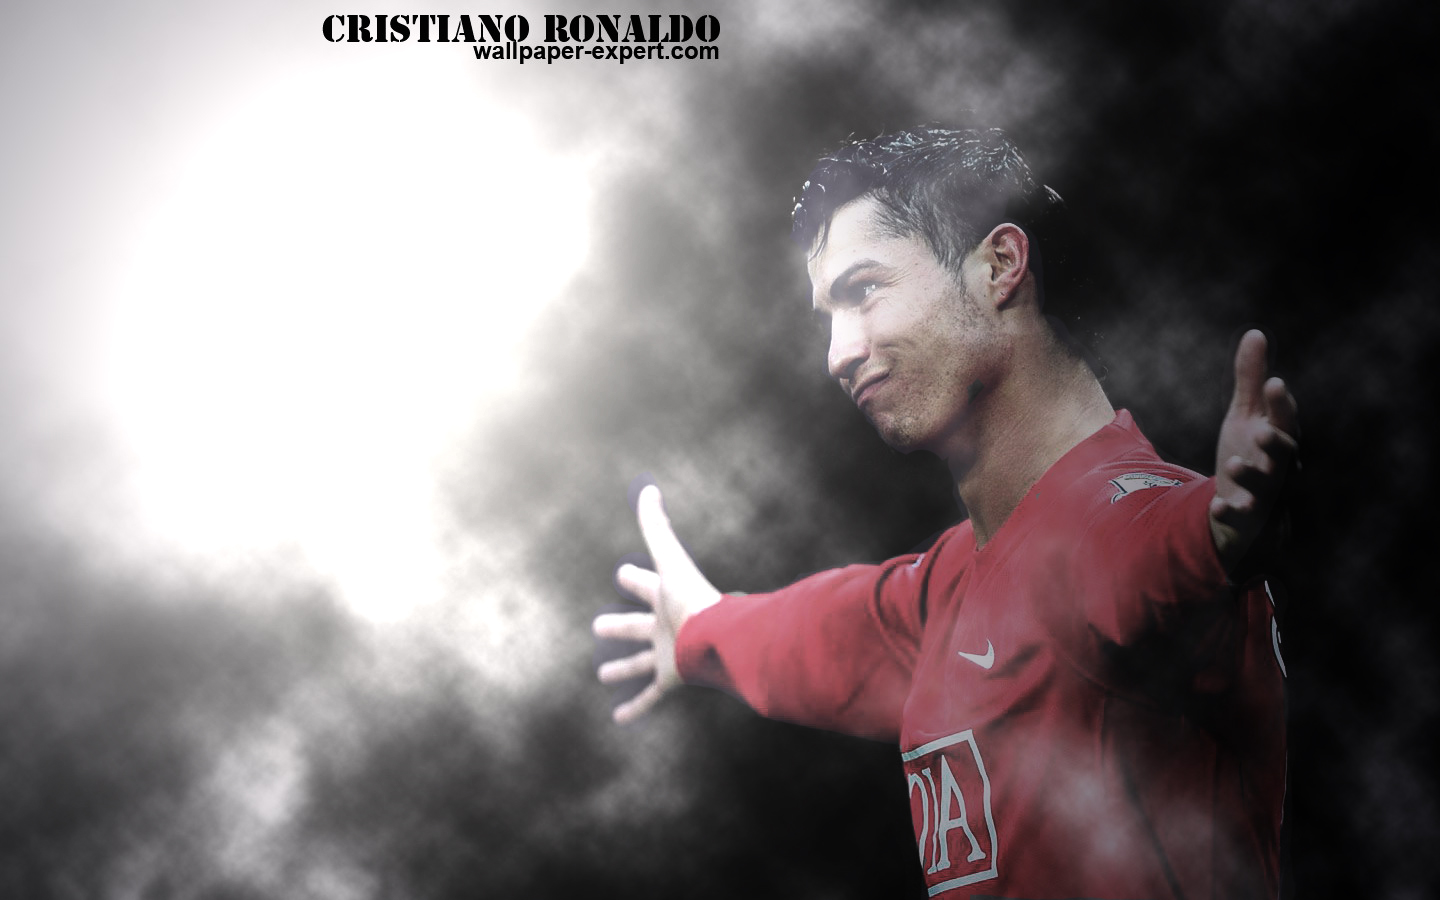 cristiano ronaldo wallpaper fhoto,foot ball player